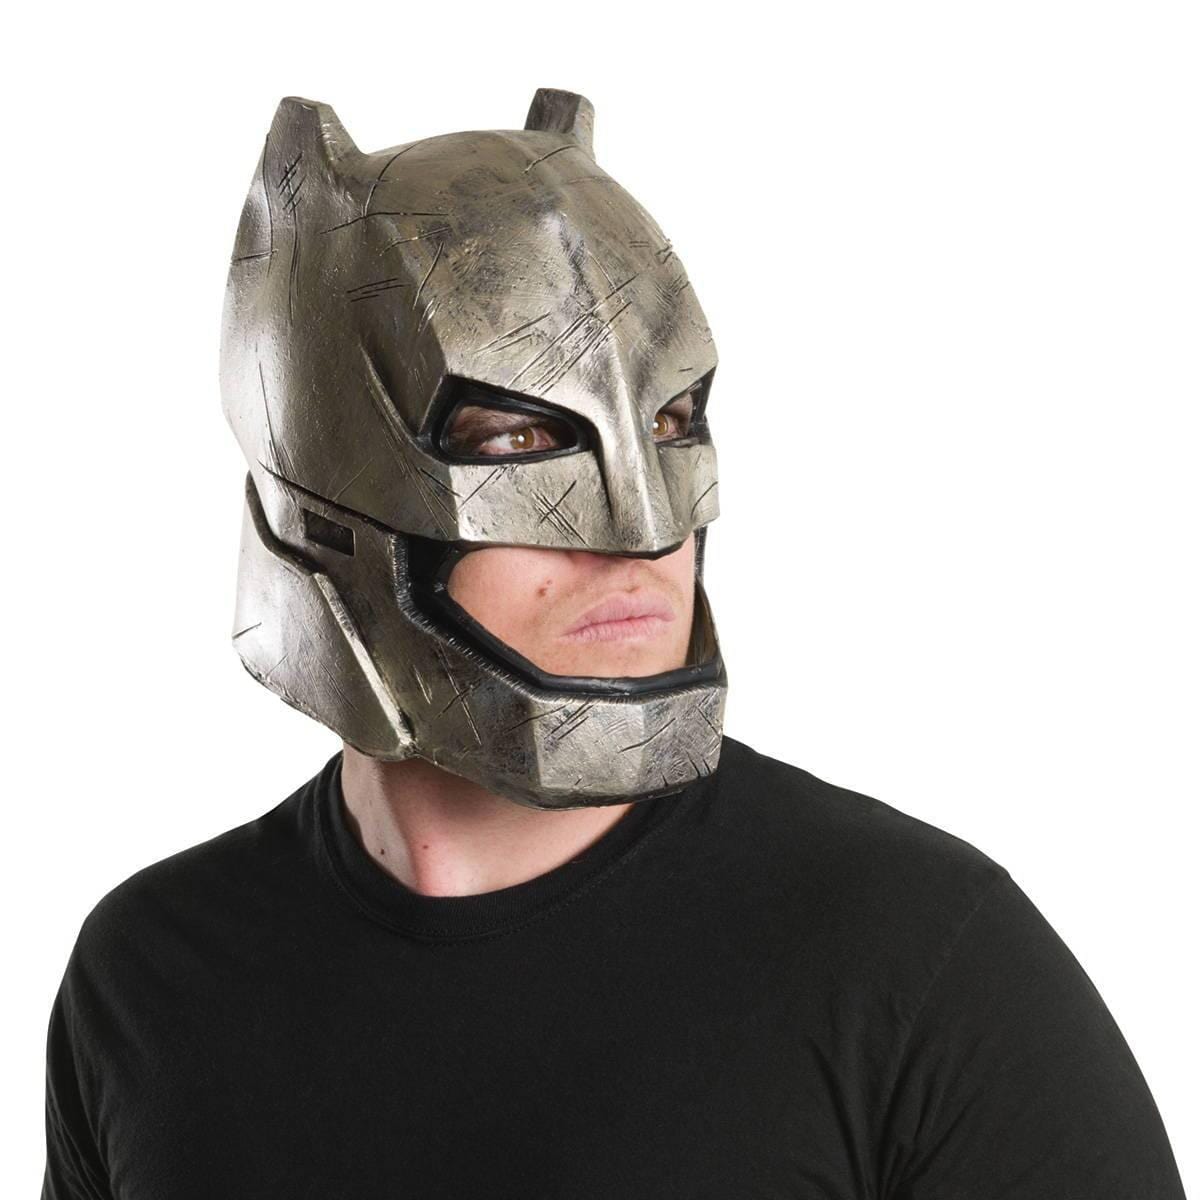 RUBIE S COSTUME CO Costume Accessories Batman armored mask for men, Batman V Superman: Dawn of Justice 082686325837